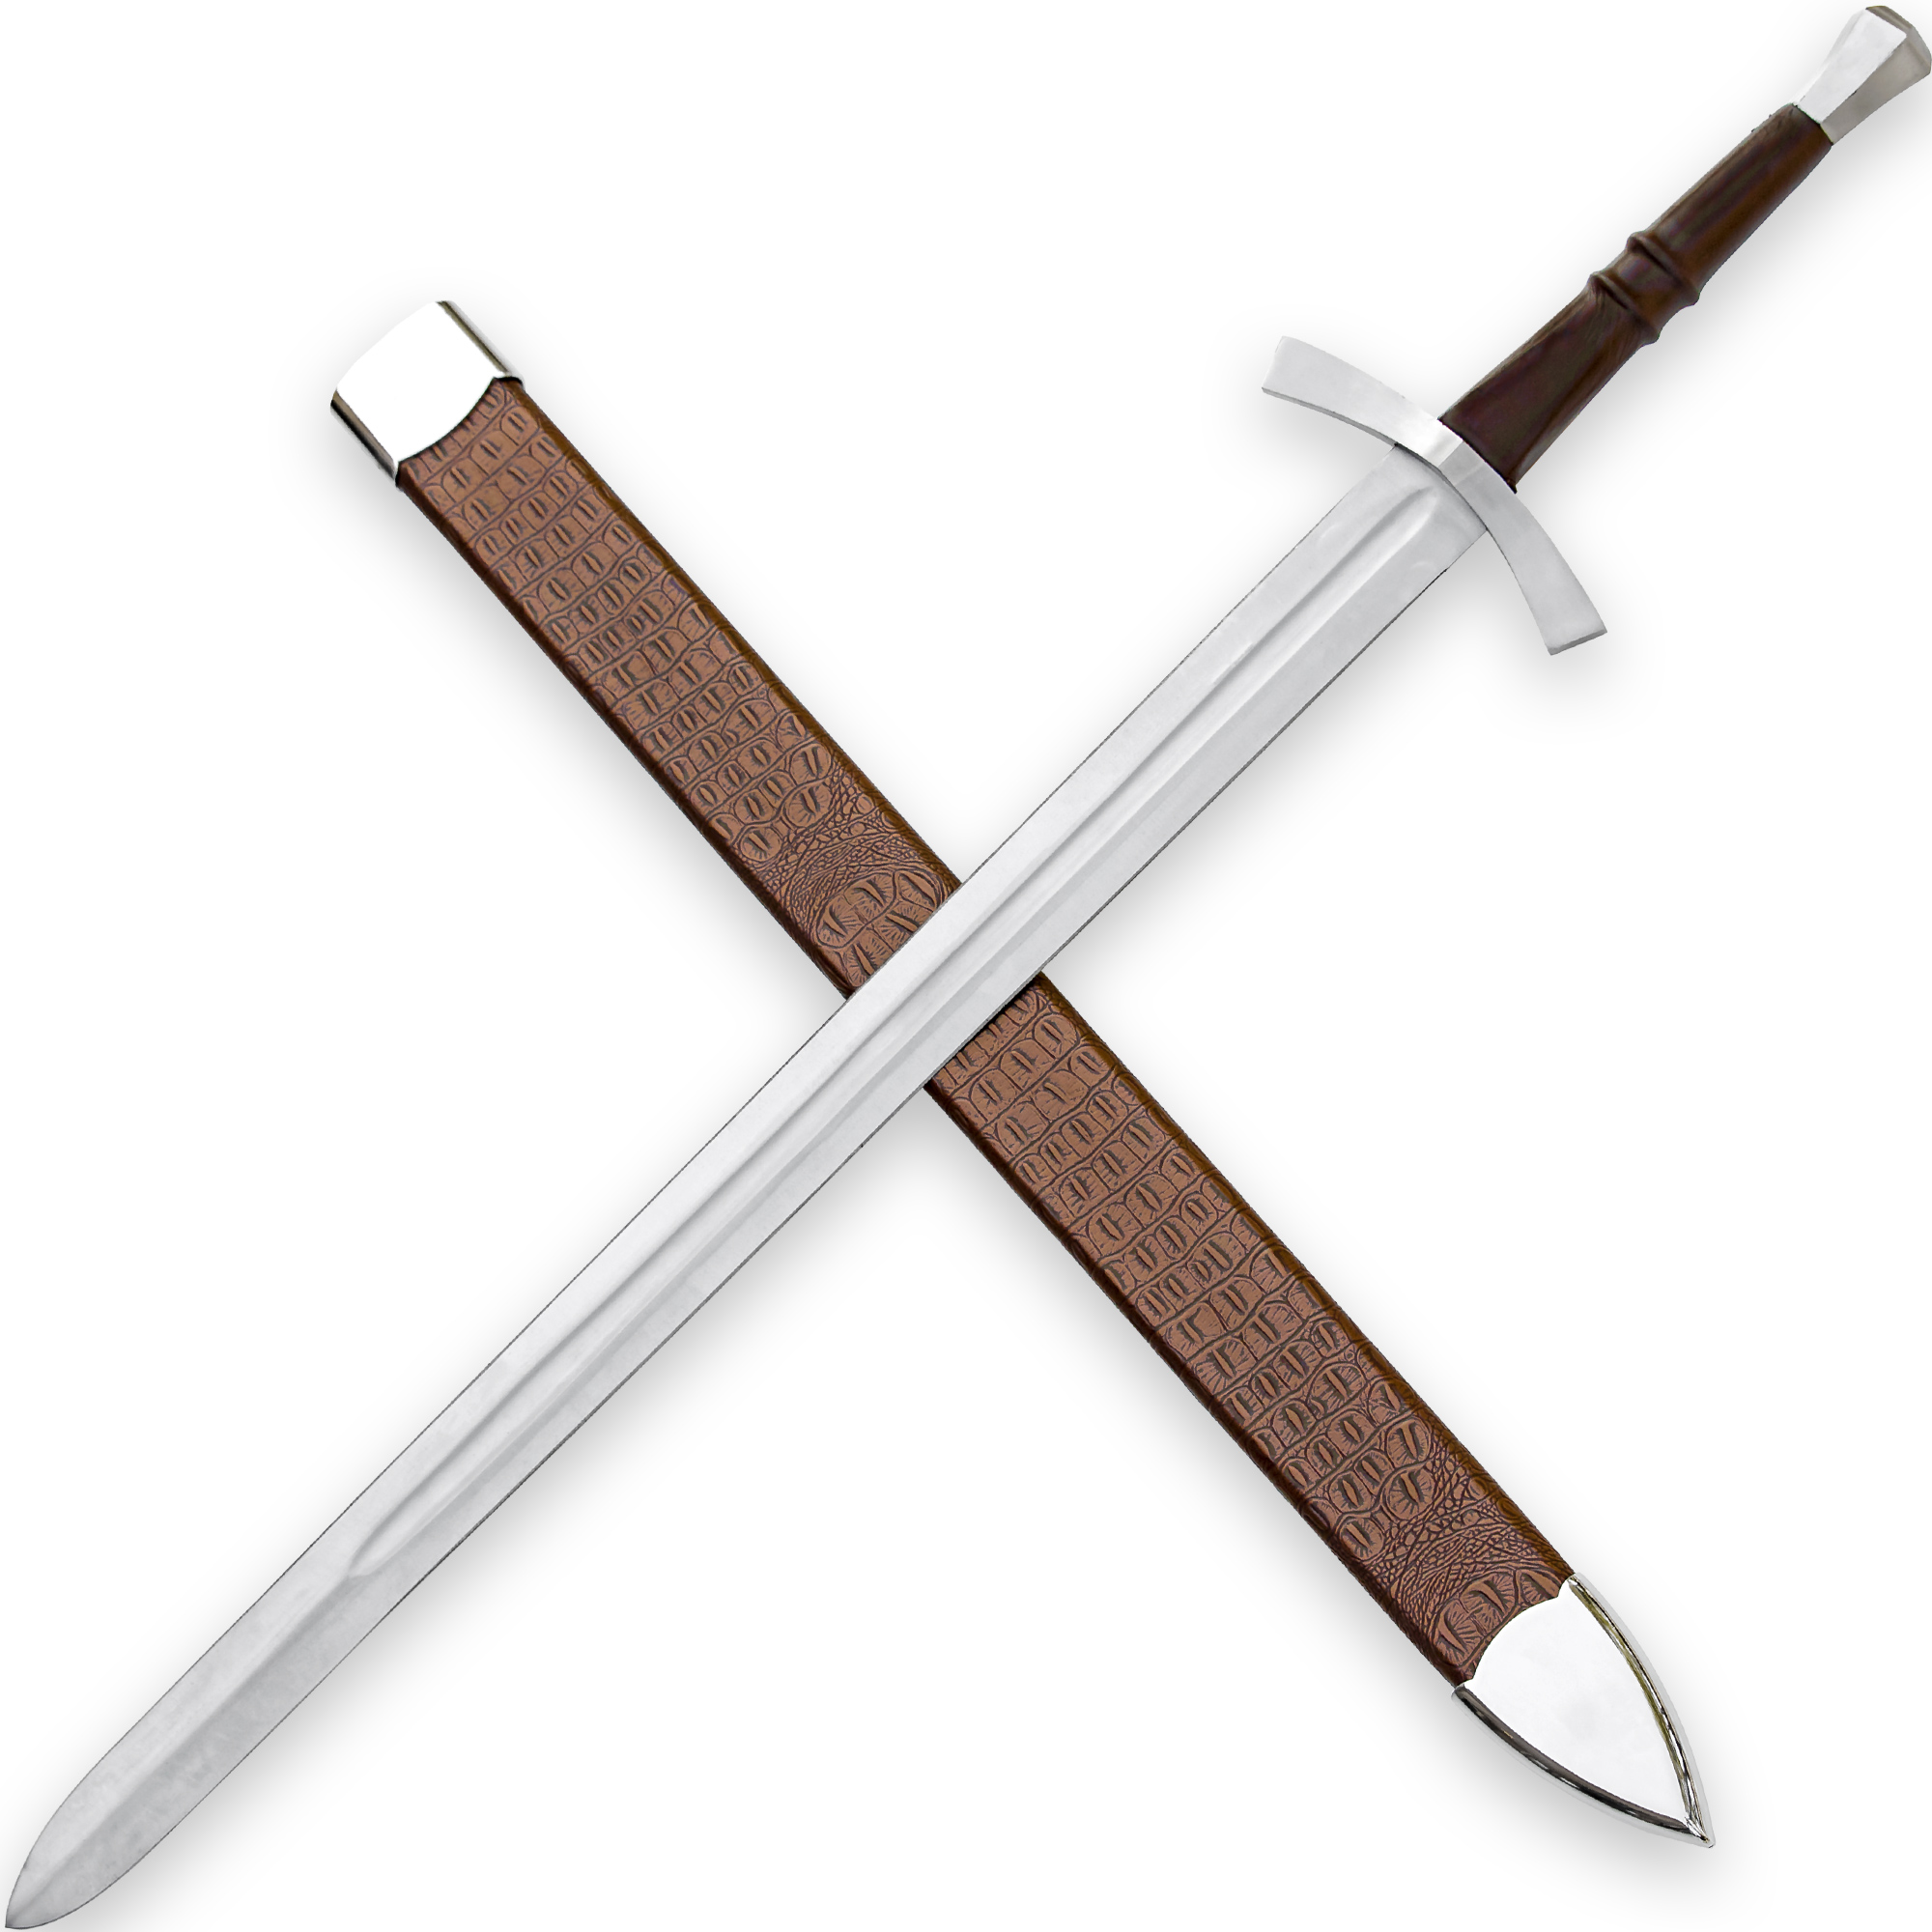 RINGing Metal 1095 High Carbon Steel Medieval Sword Replica